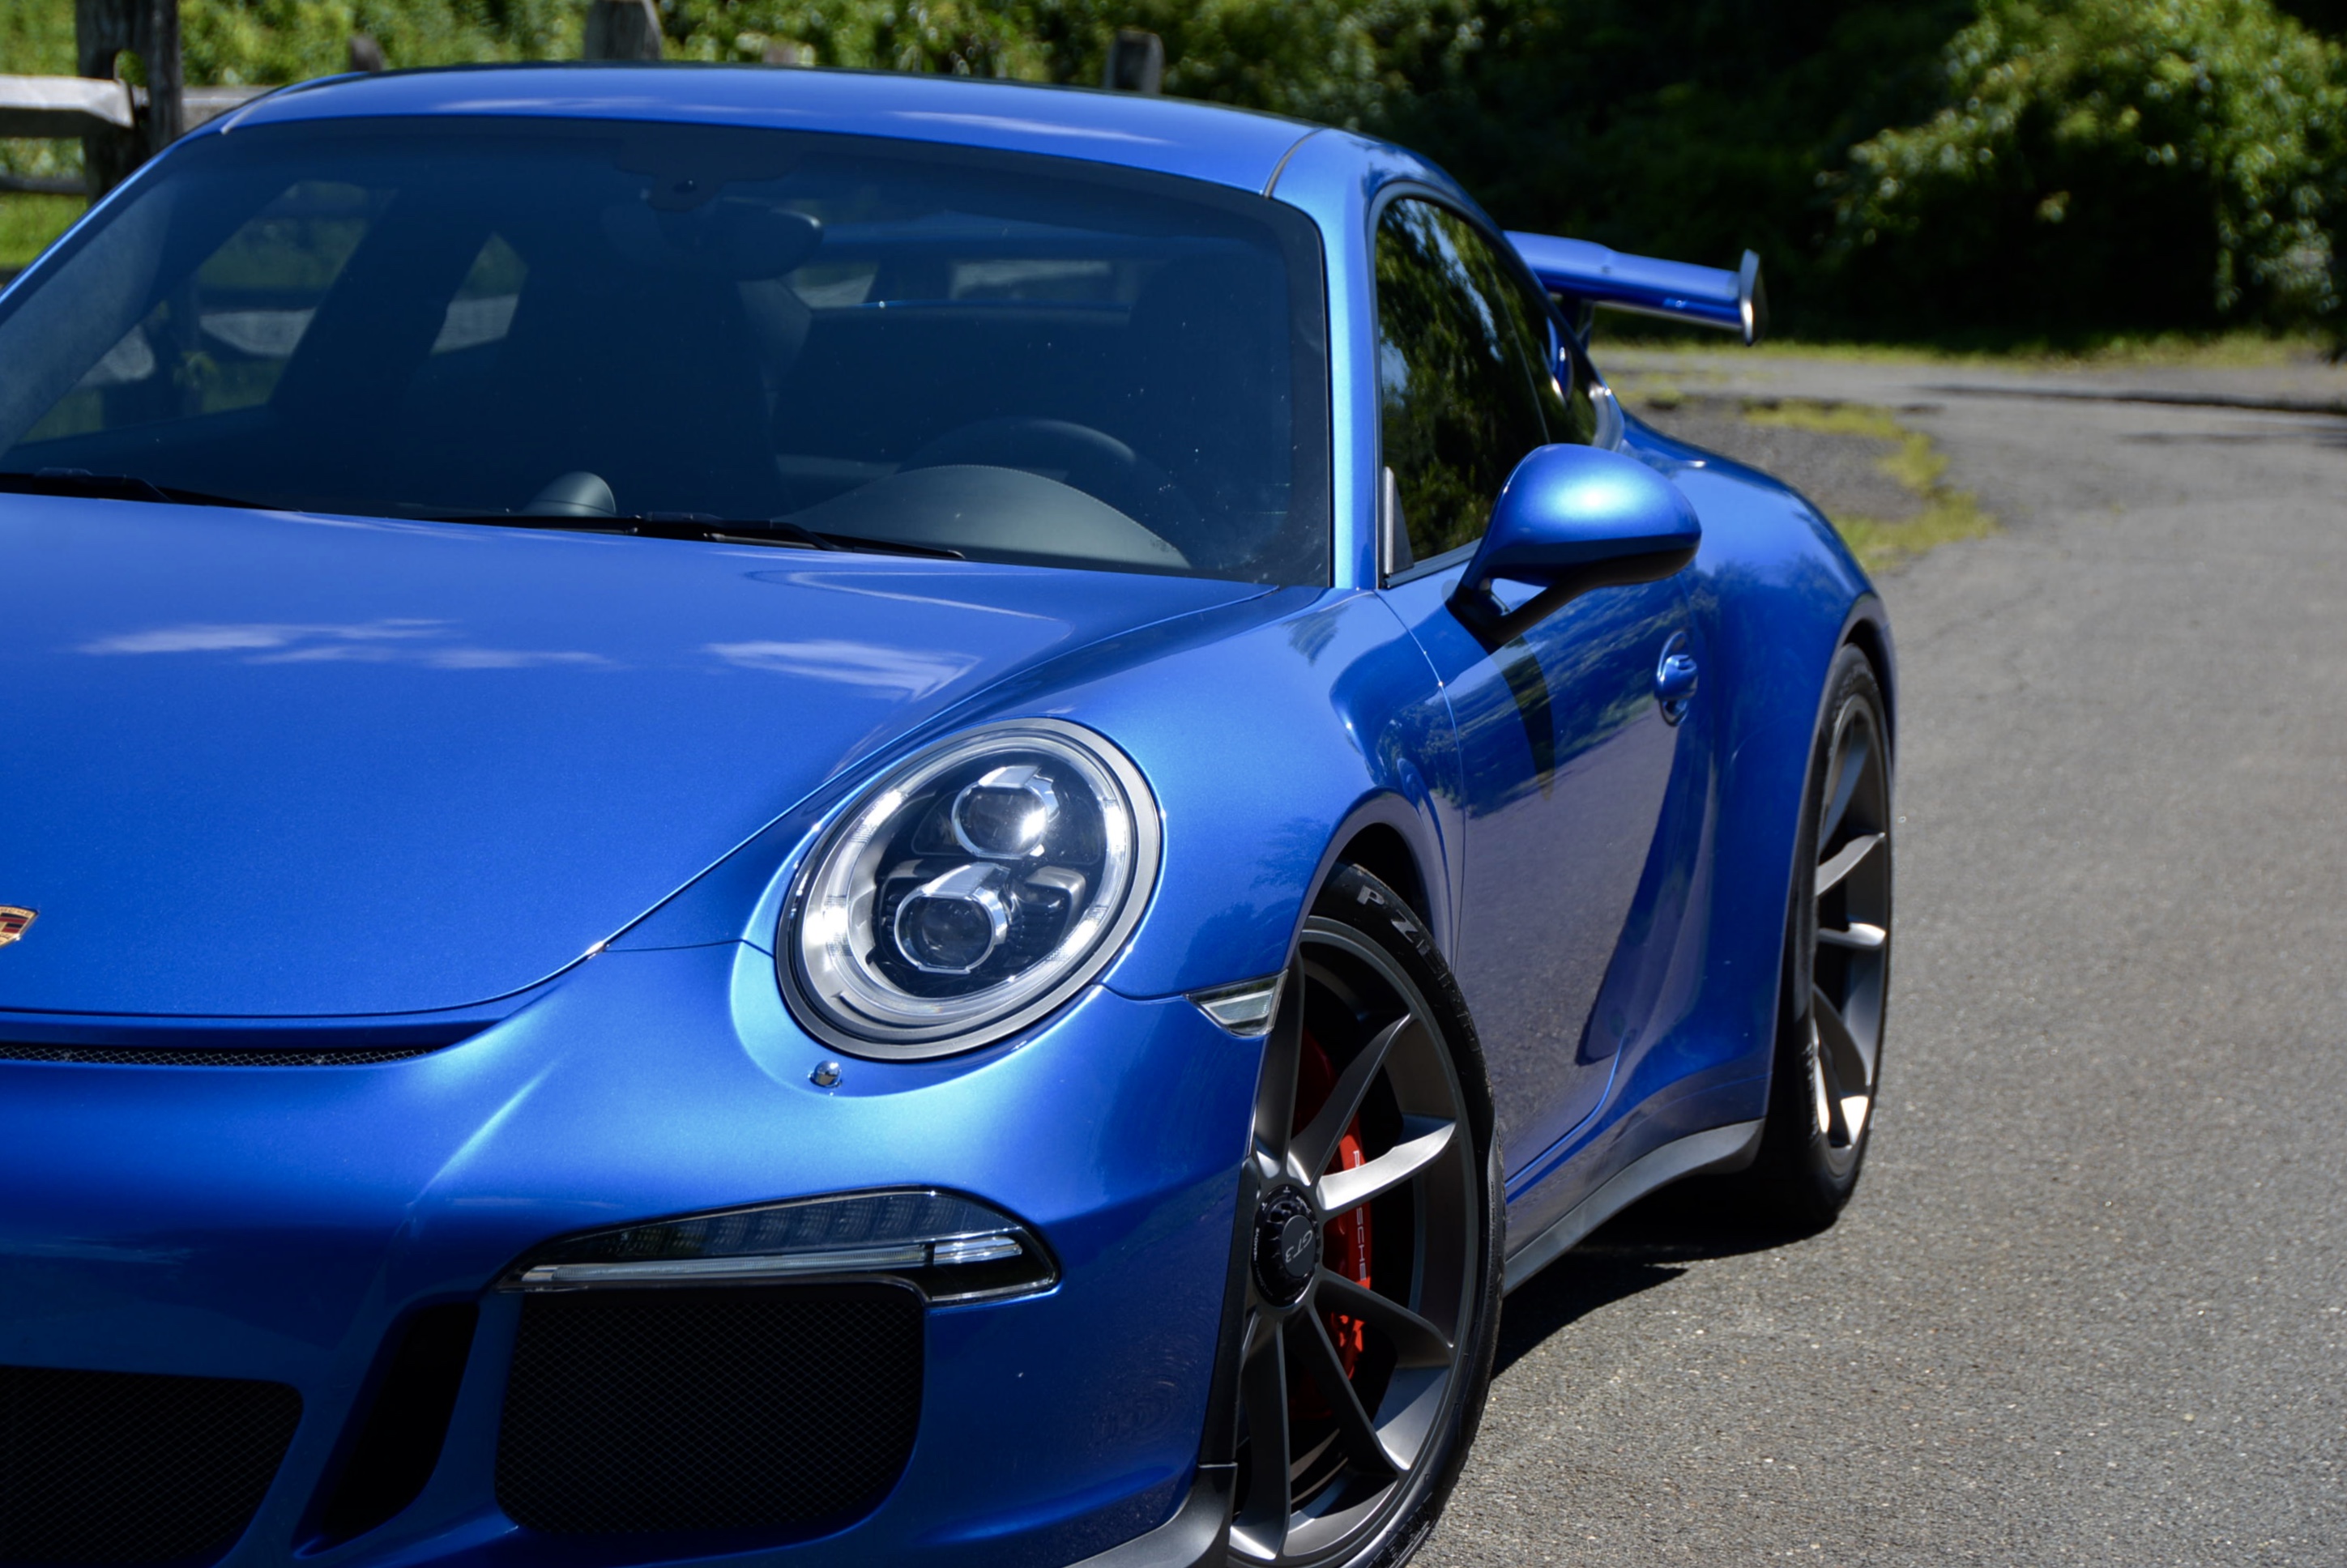 Dealer Inventory 2015 Porsche GT3 Sapphire Blue - Rennlist - Porsche ...